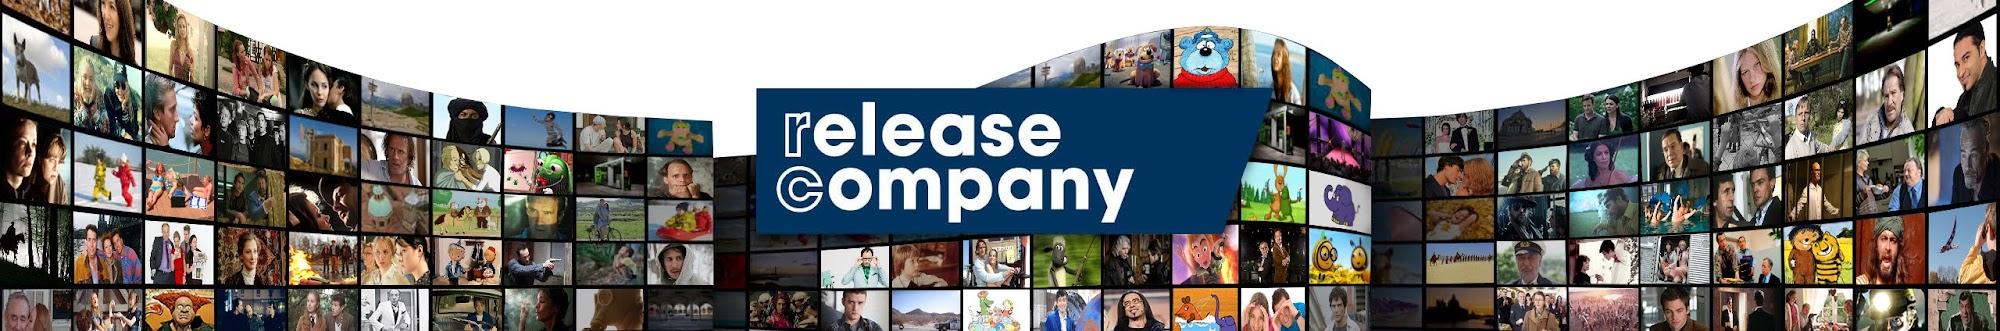 Release Company